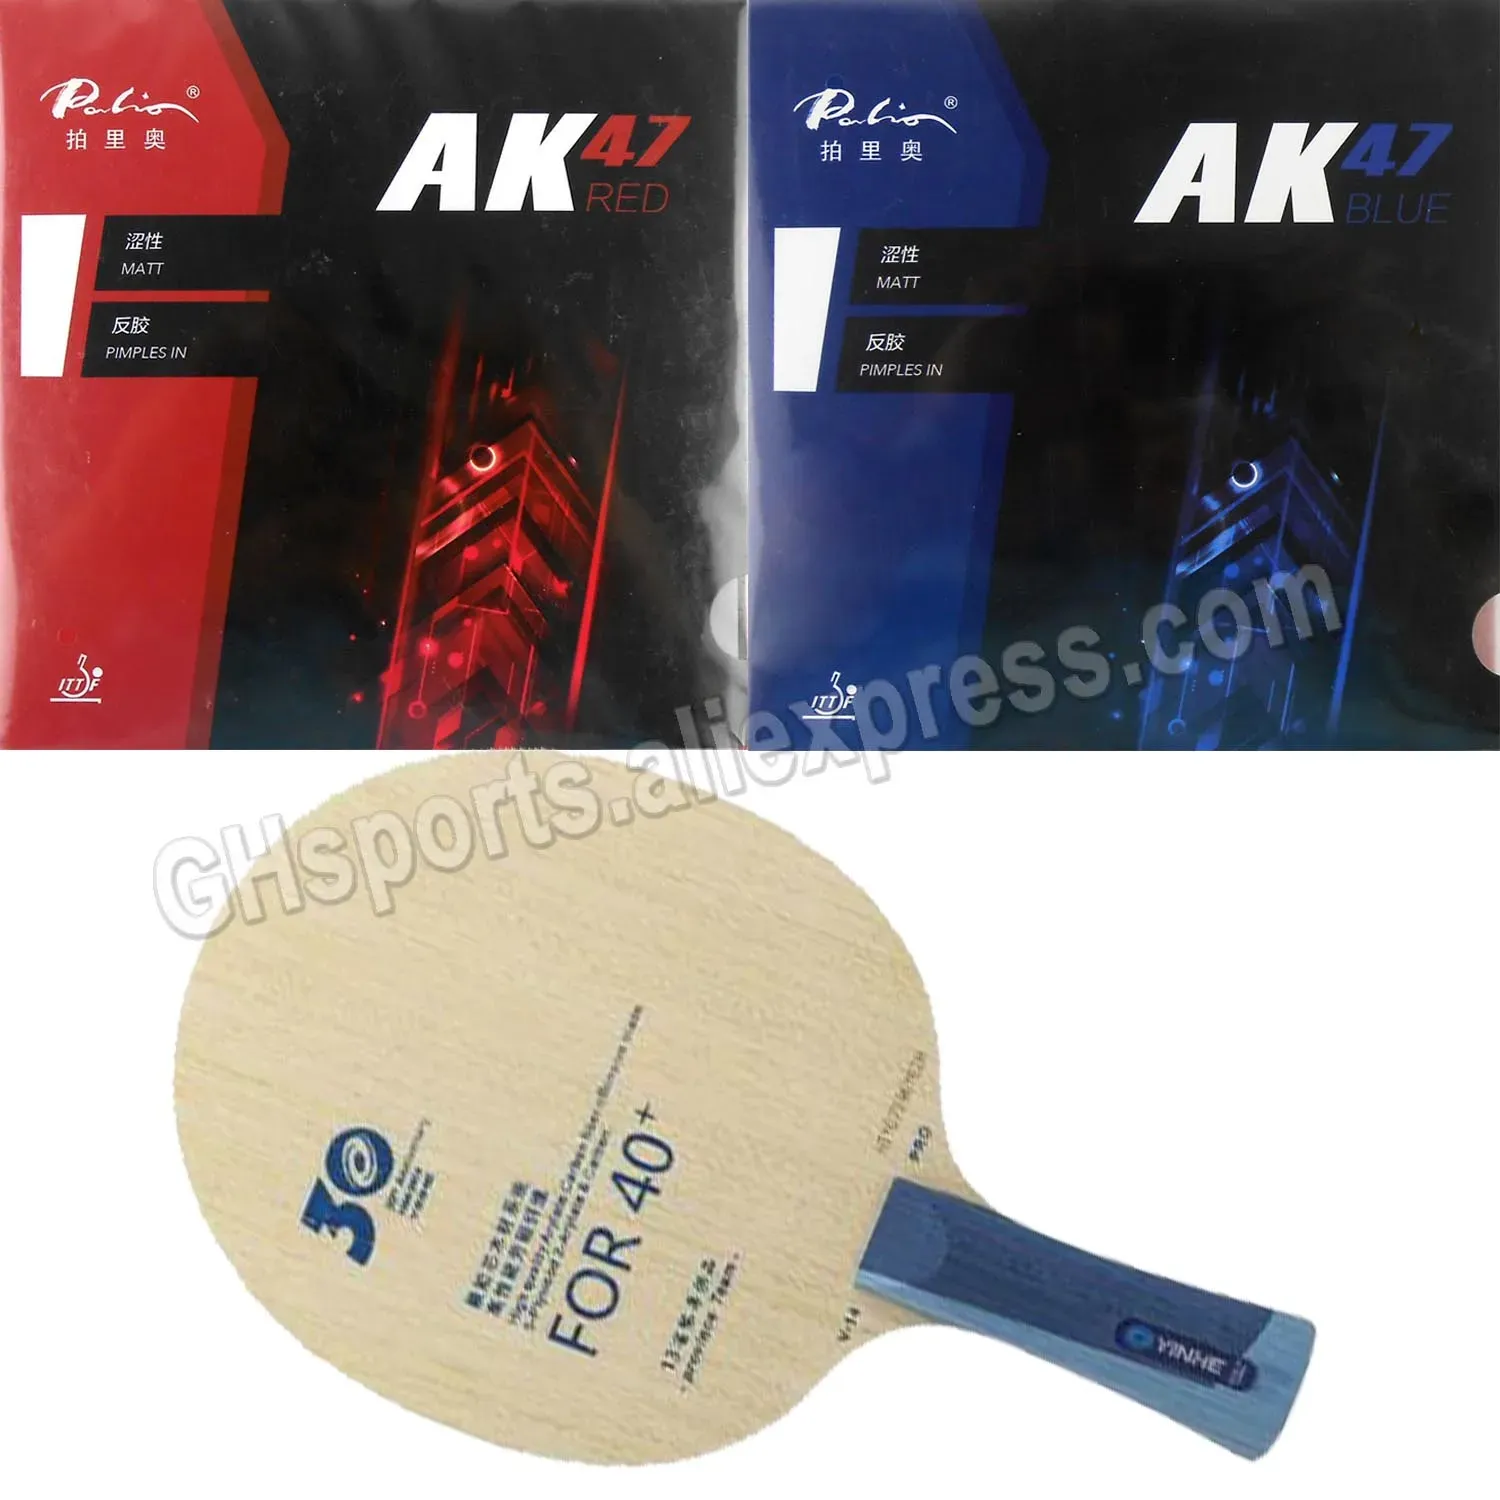 Pro Combo Racket Yinhe V14 V-14 Pro med AK47 Red och AK47 Blue Rumber